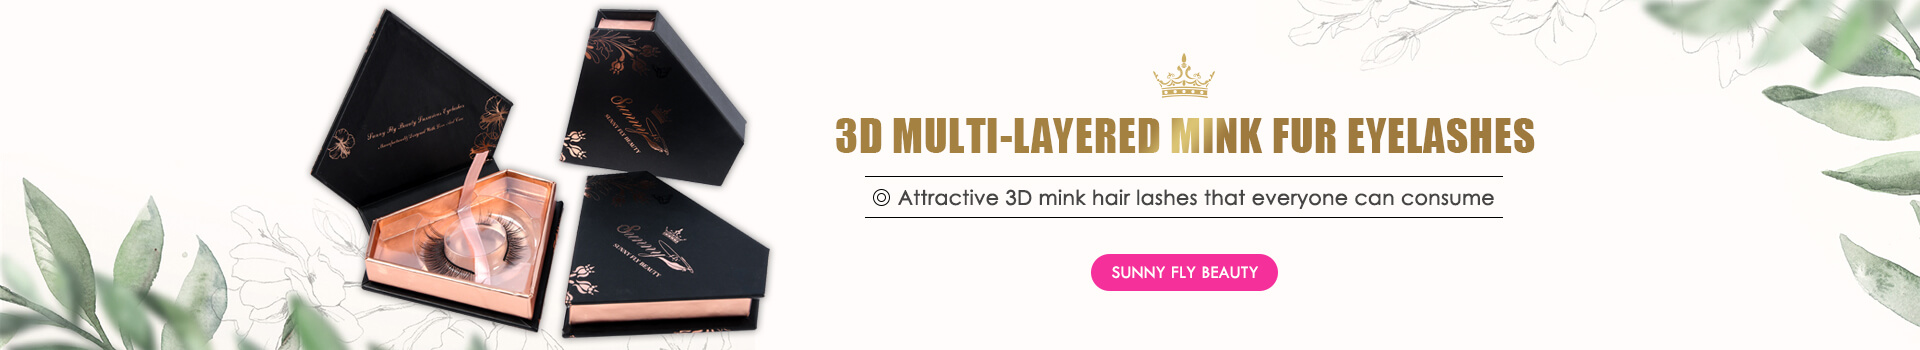 3D Multi-layered Mink Fur Eyelashes MG57